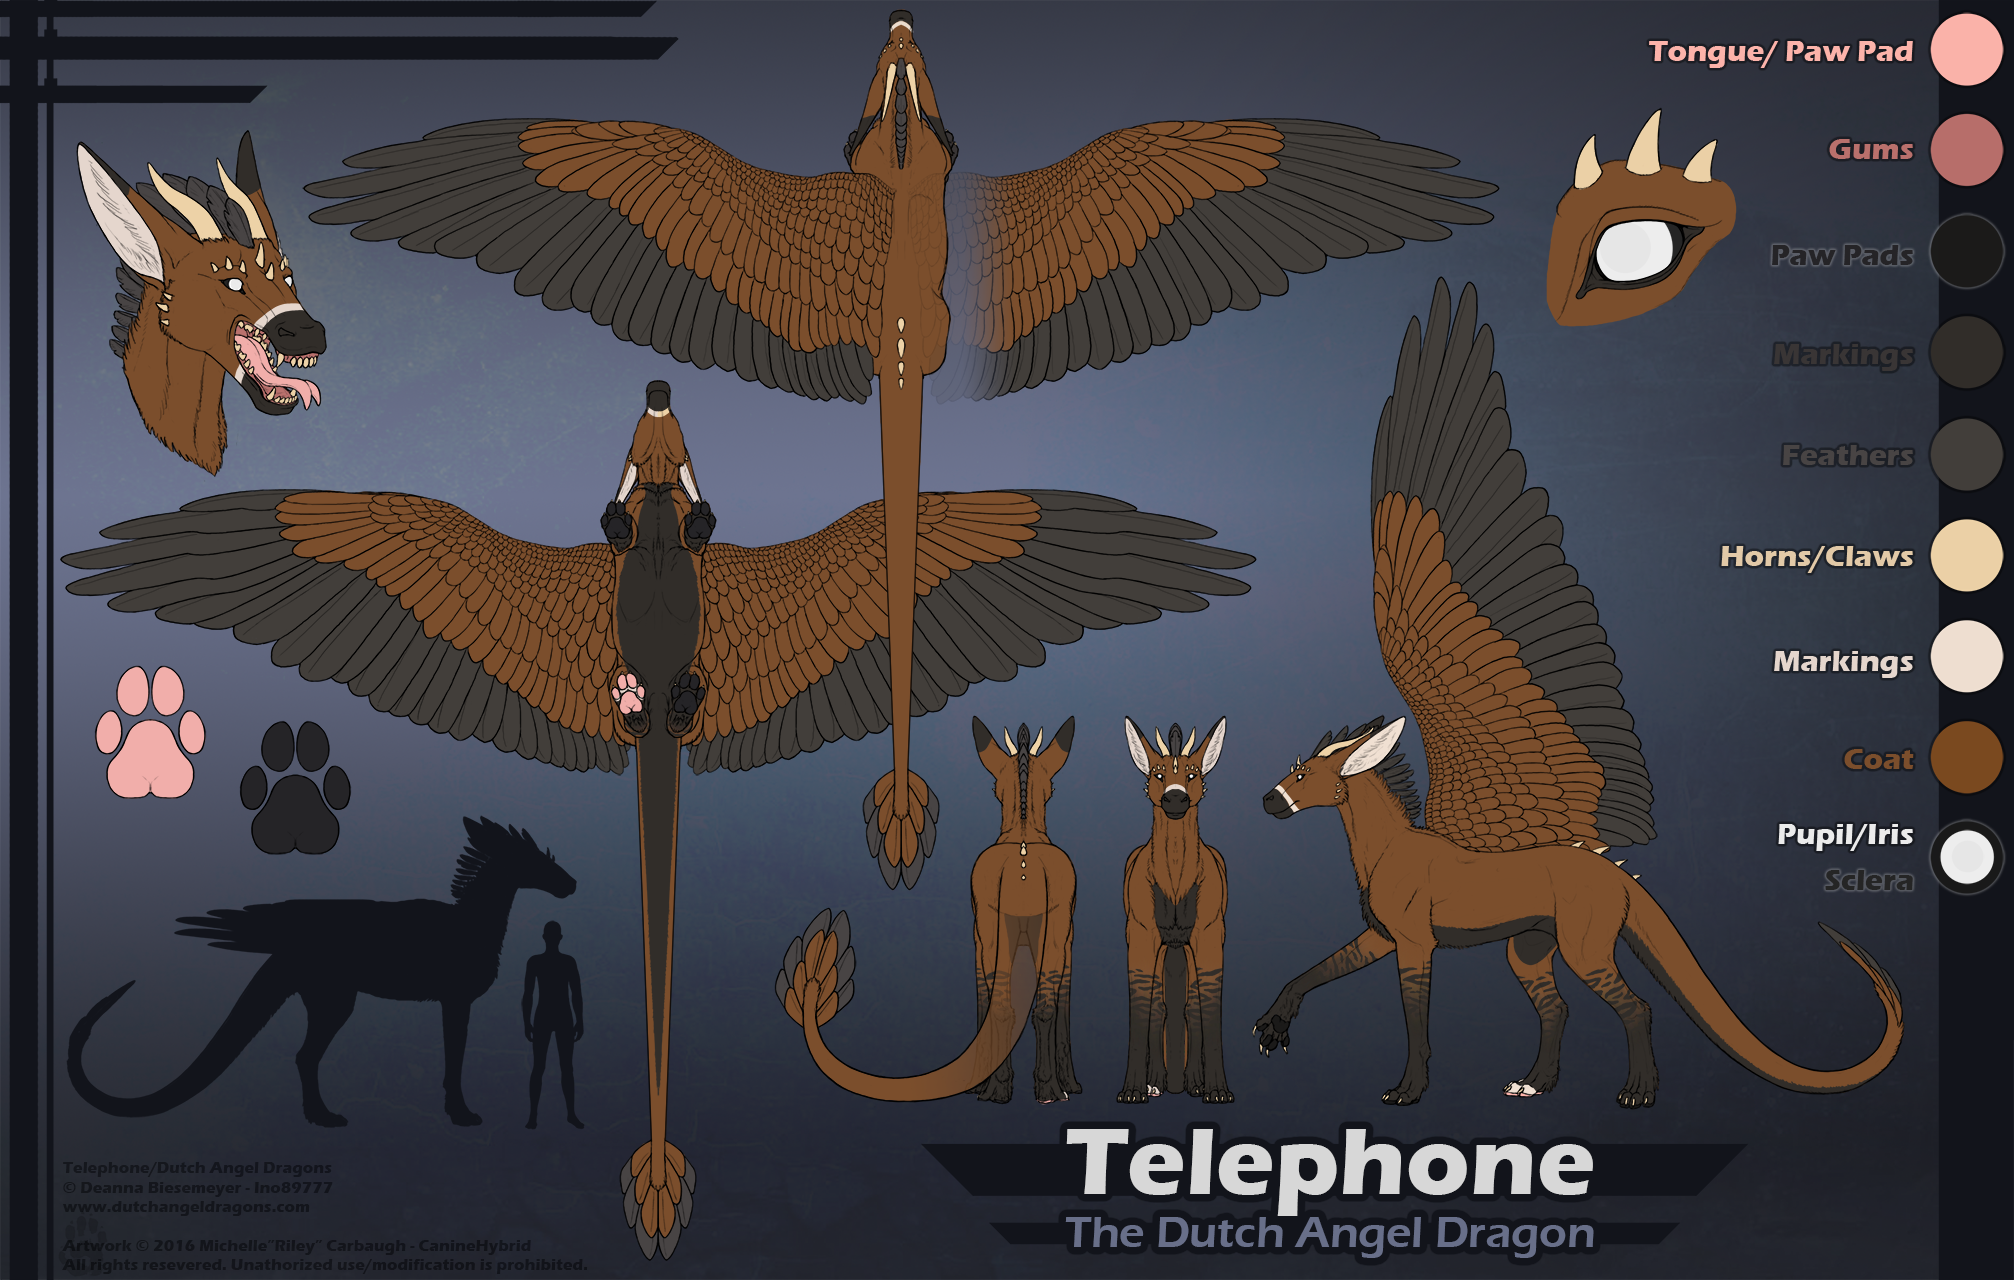 Dutch angel dragon telephone